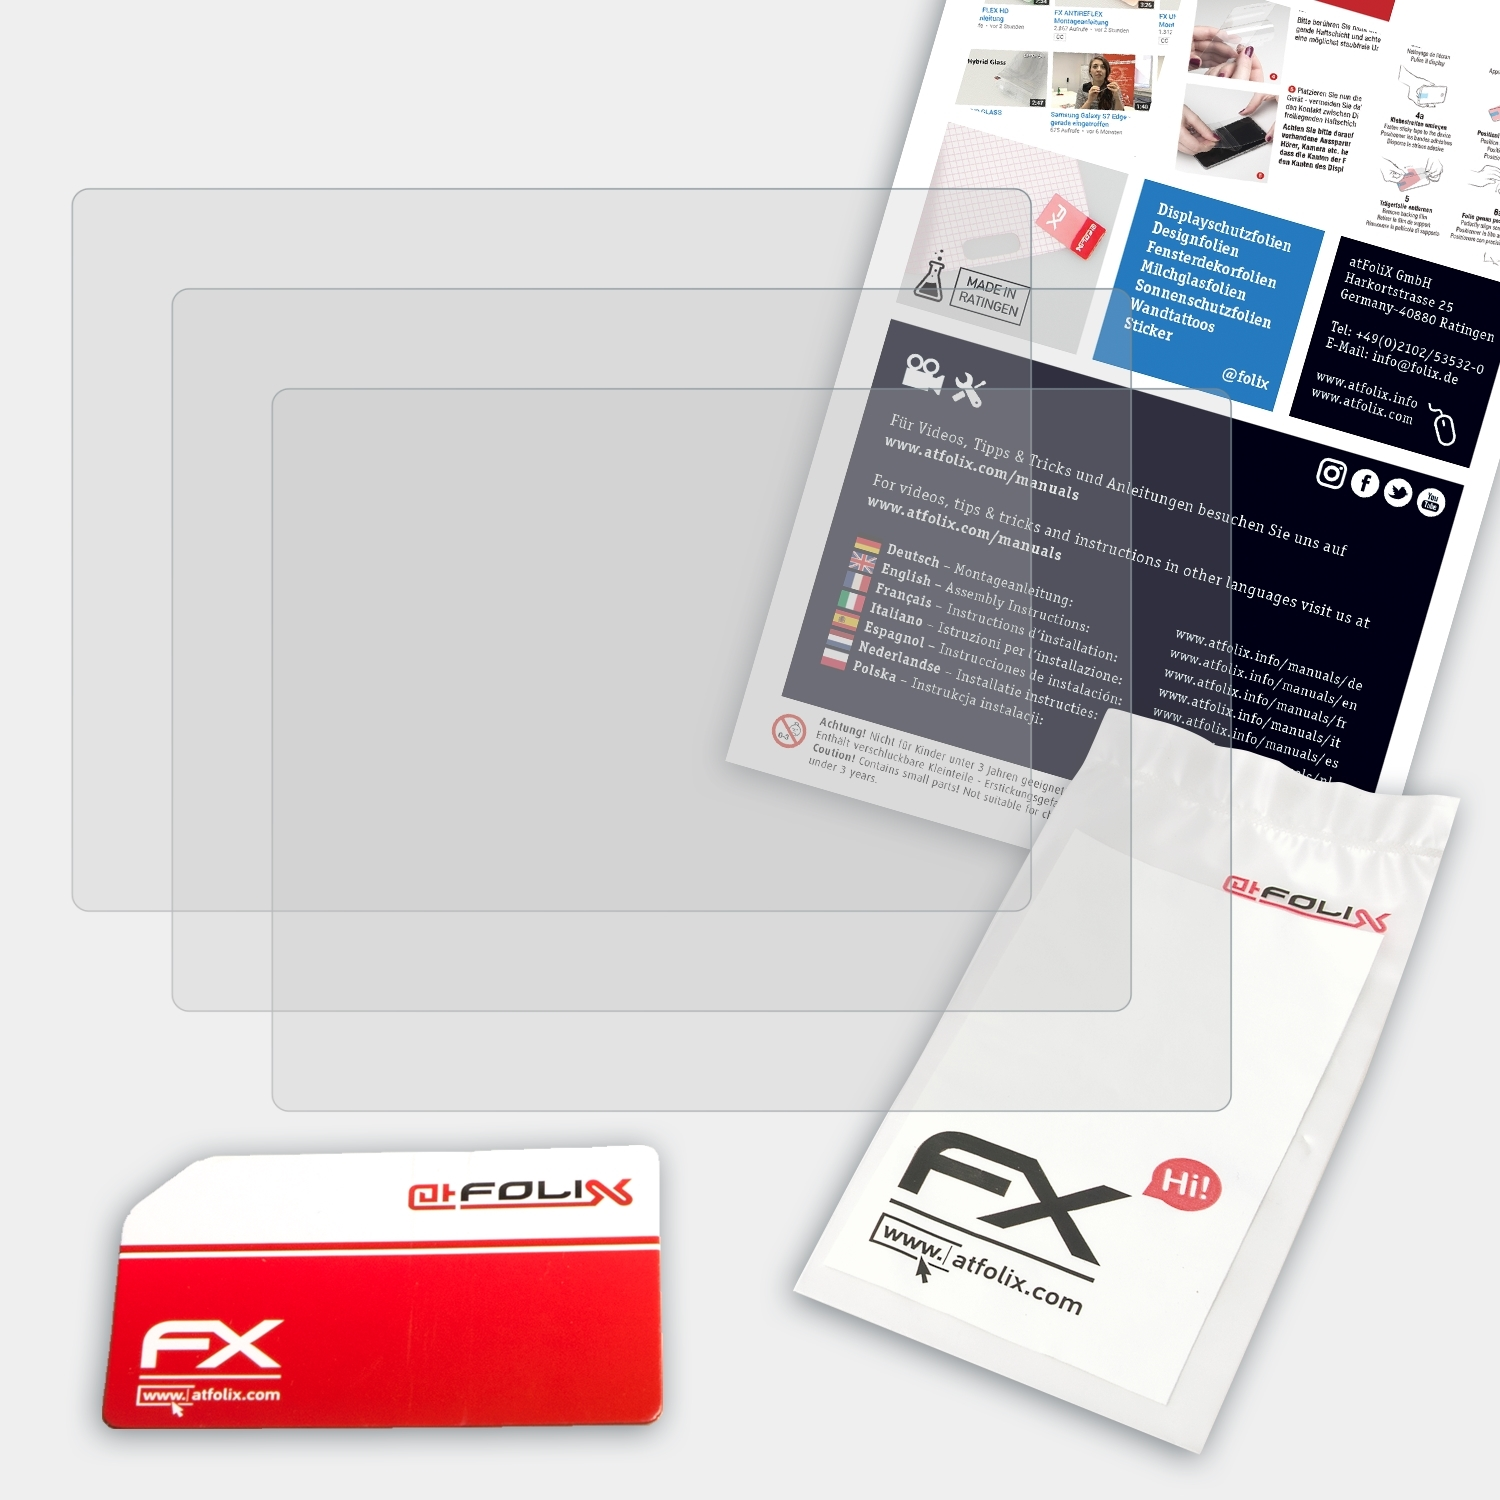 X100) Fujifilm FinePix ATFOLIX 3x Displayschutz(für FX-Antireflex